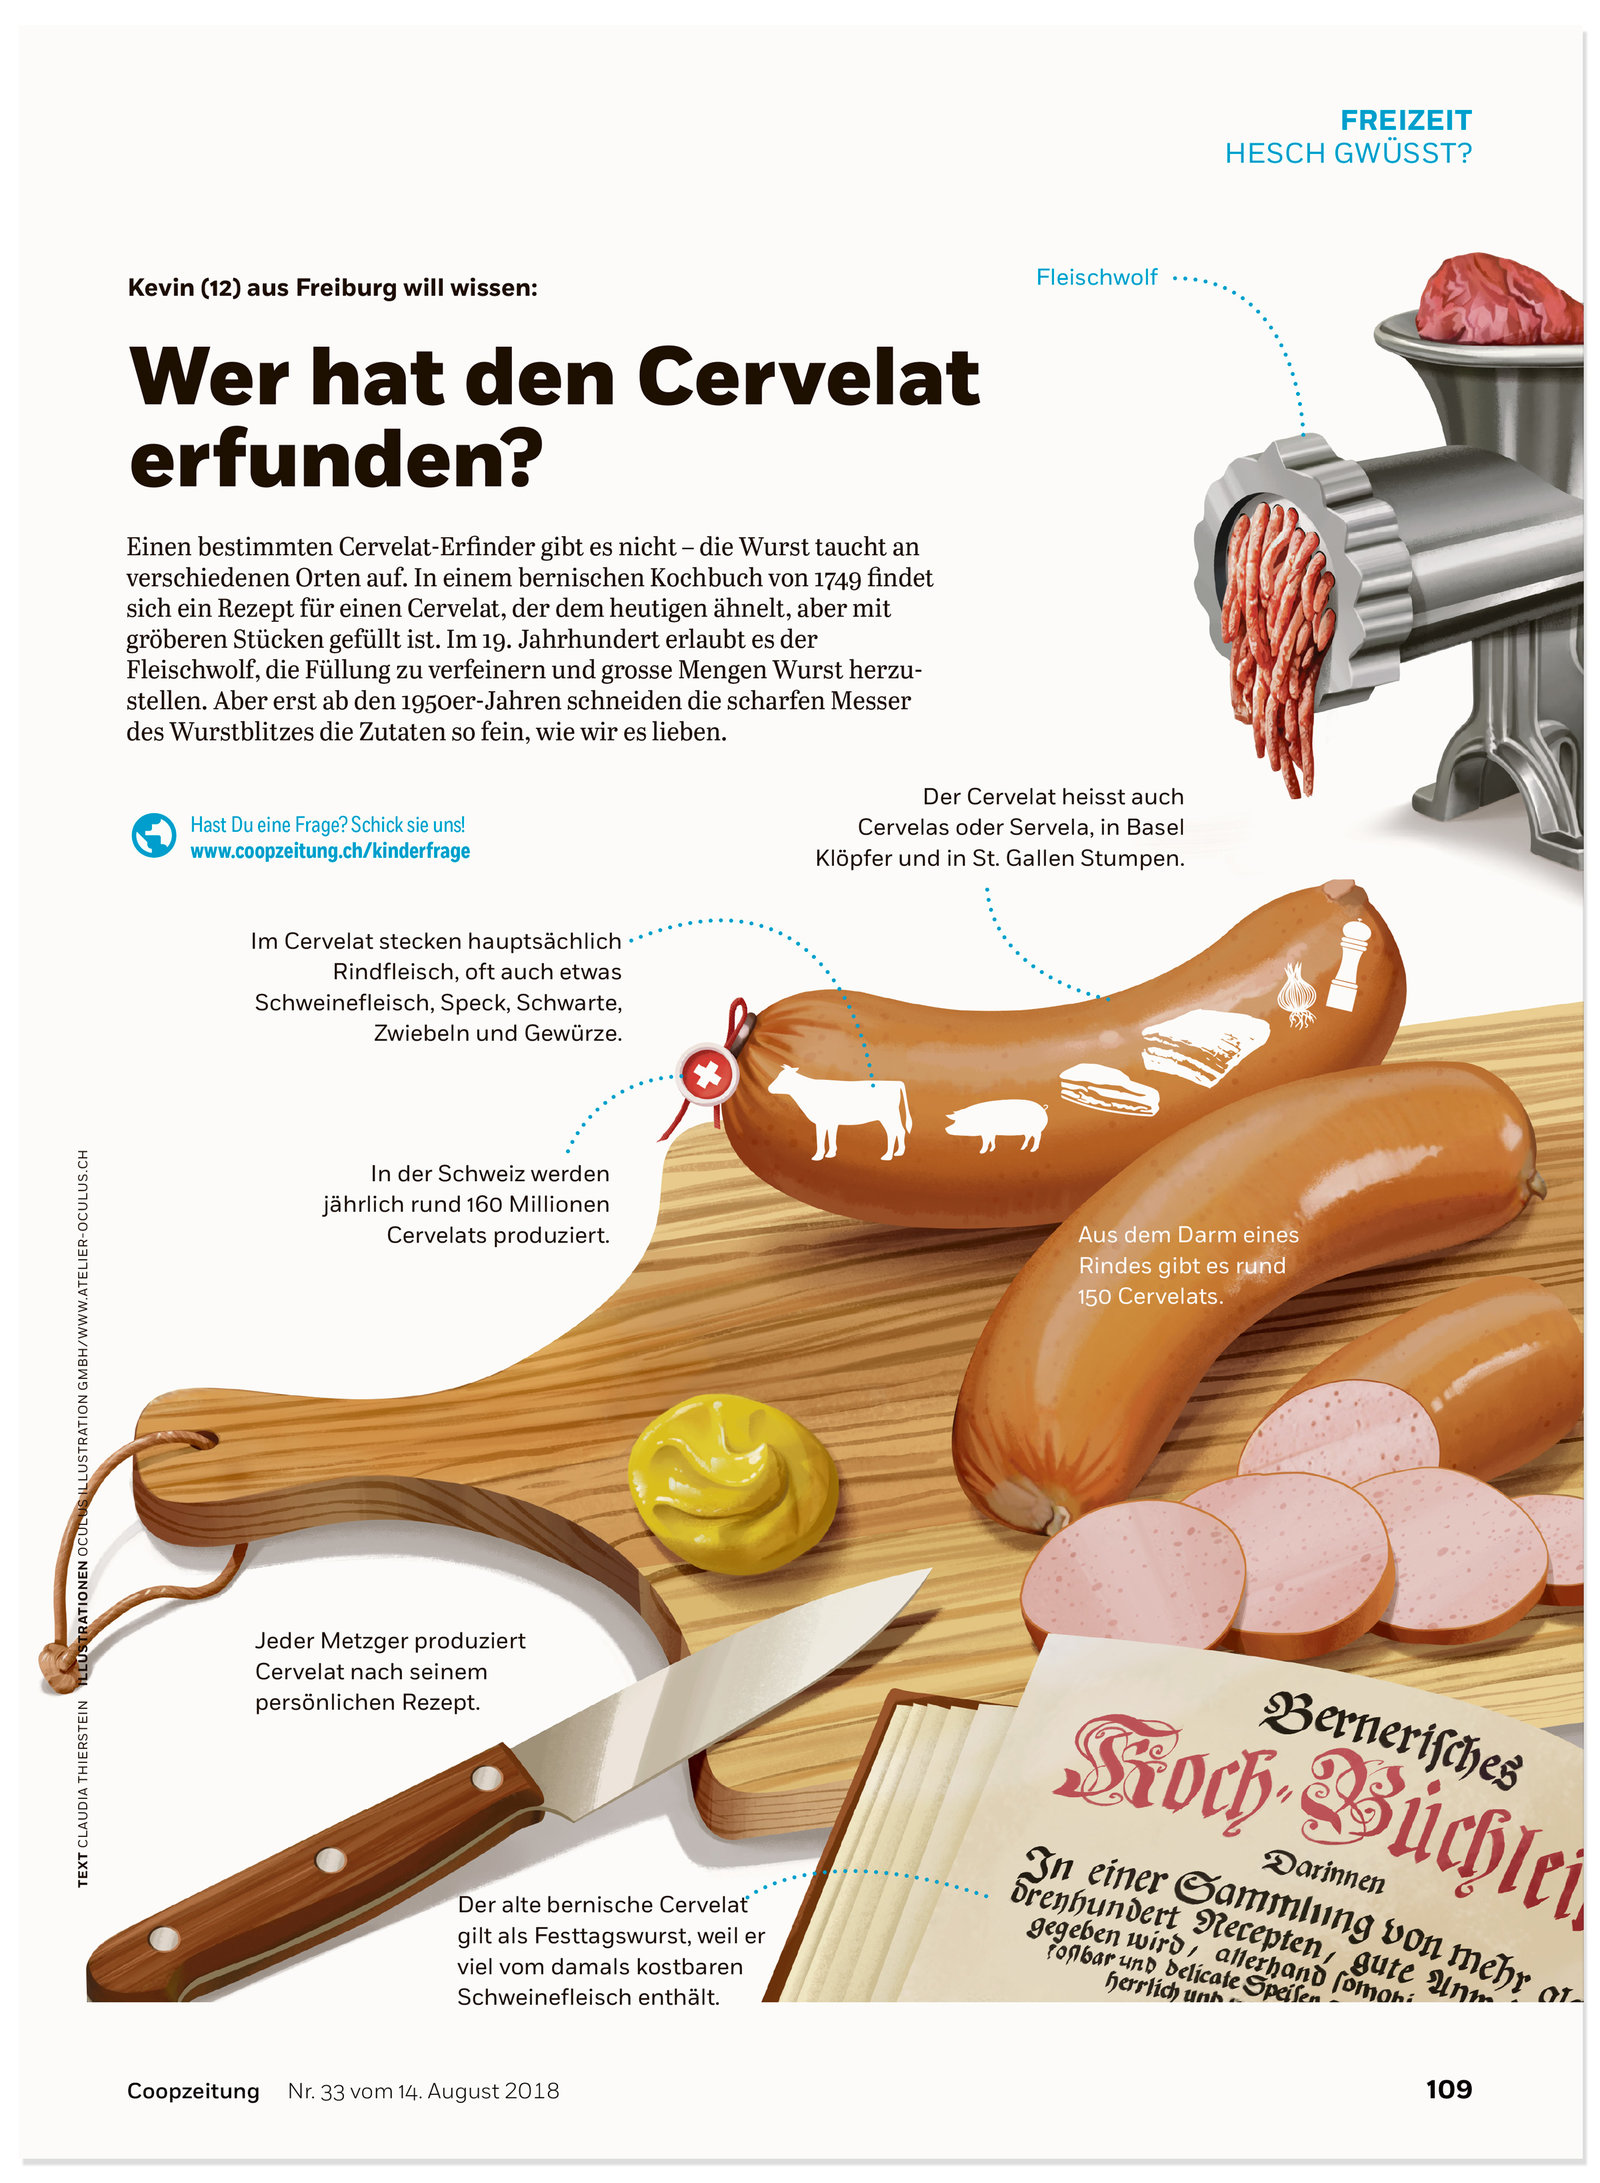 oculus-illustration-coopzeitung-hesch-gwuesst-cervelat